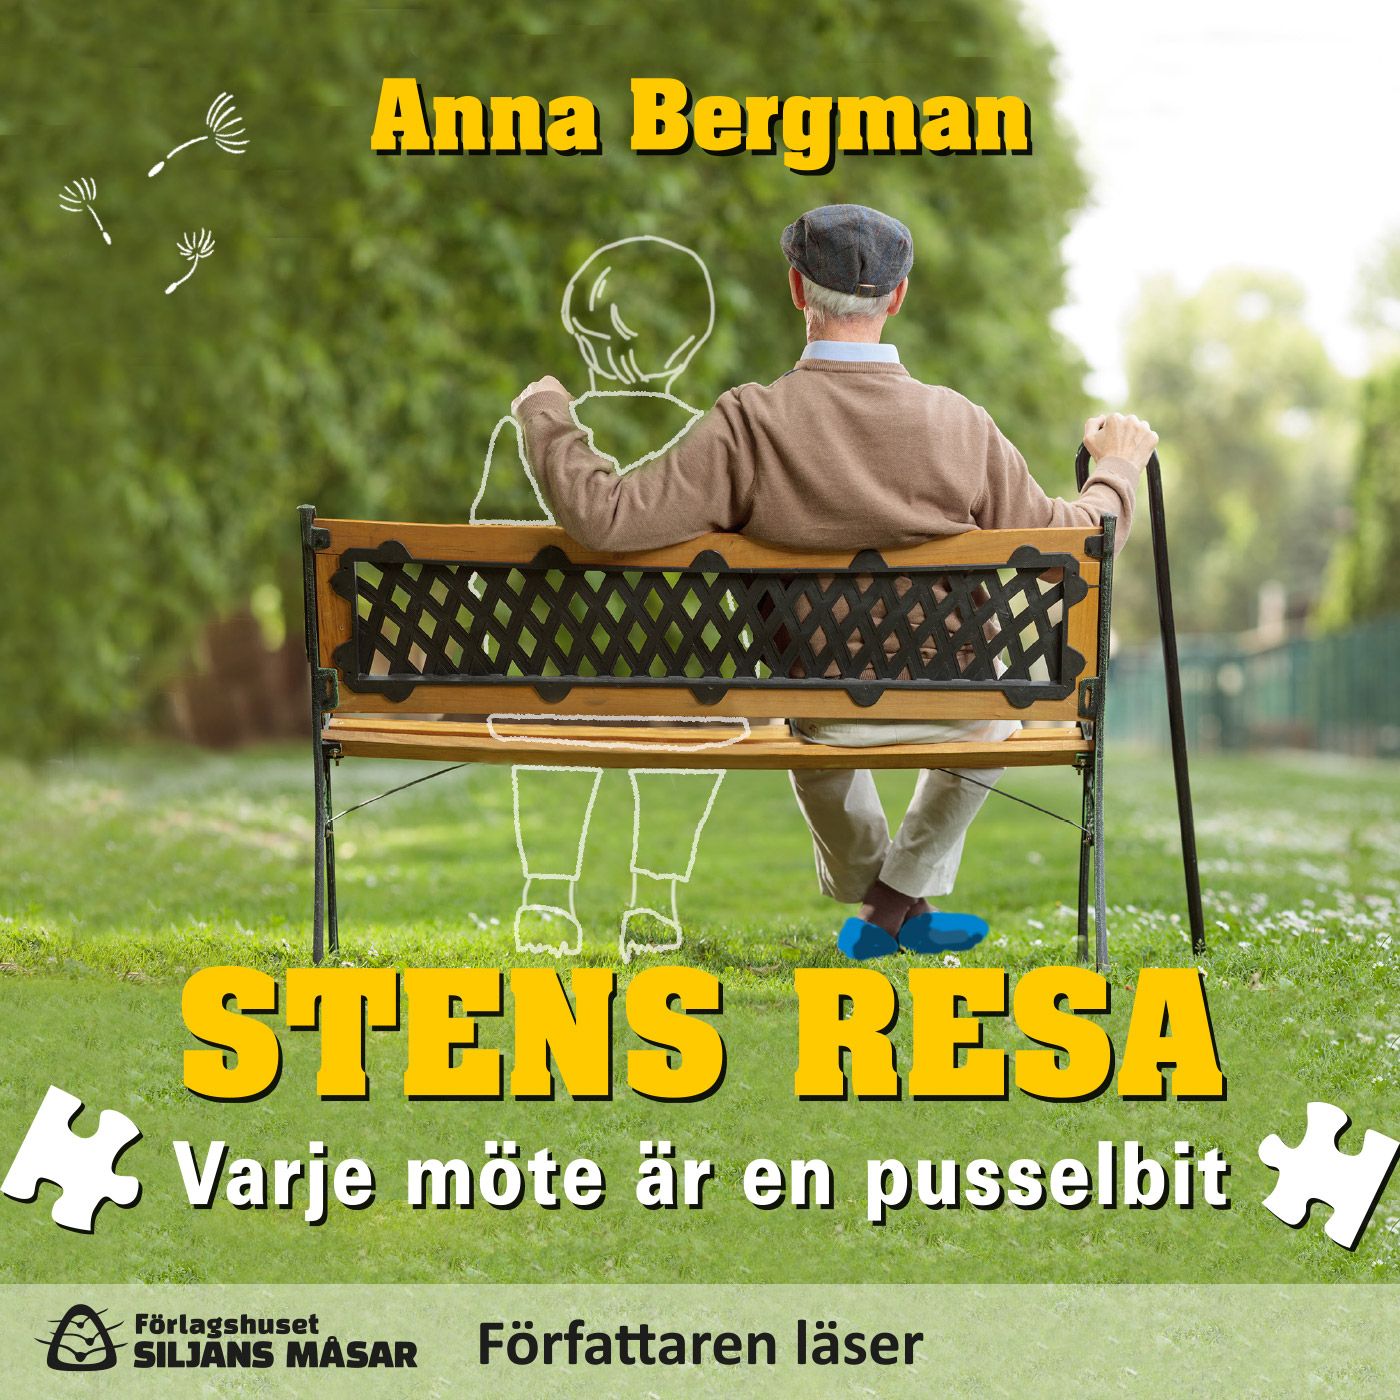 Stens resa : Varje möte är en pusselbit, audiobook by Anna Bergman